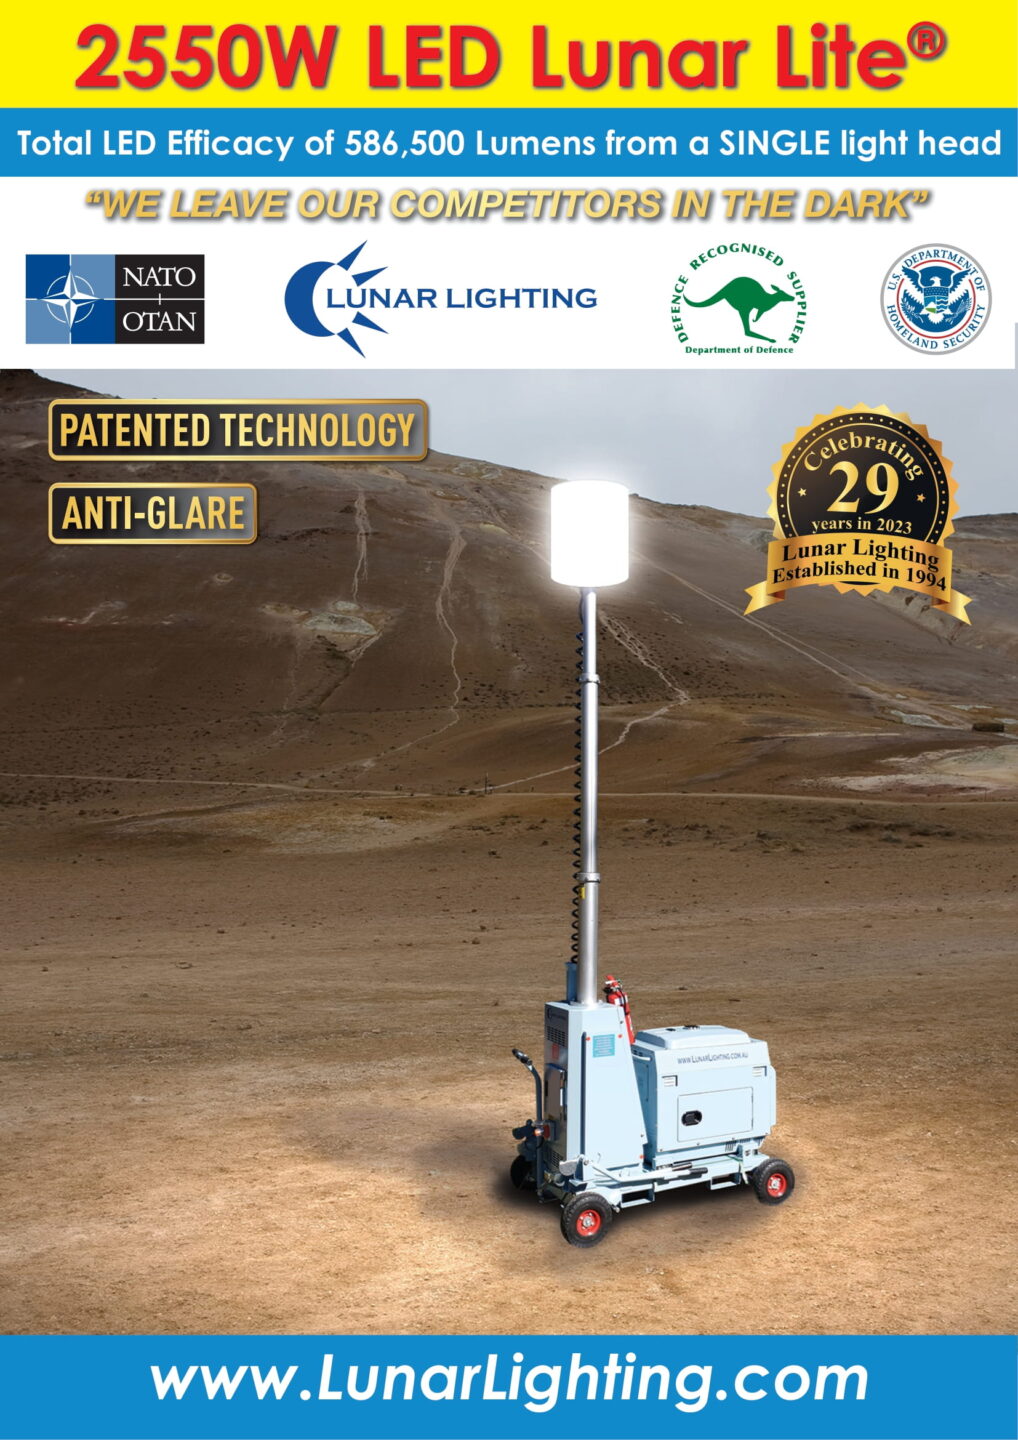 2550W-LED-Lunar-Lighting-Tower-Trolley-monteret-AUS (1)-1